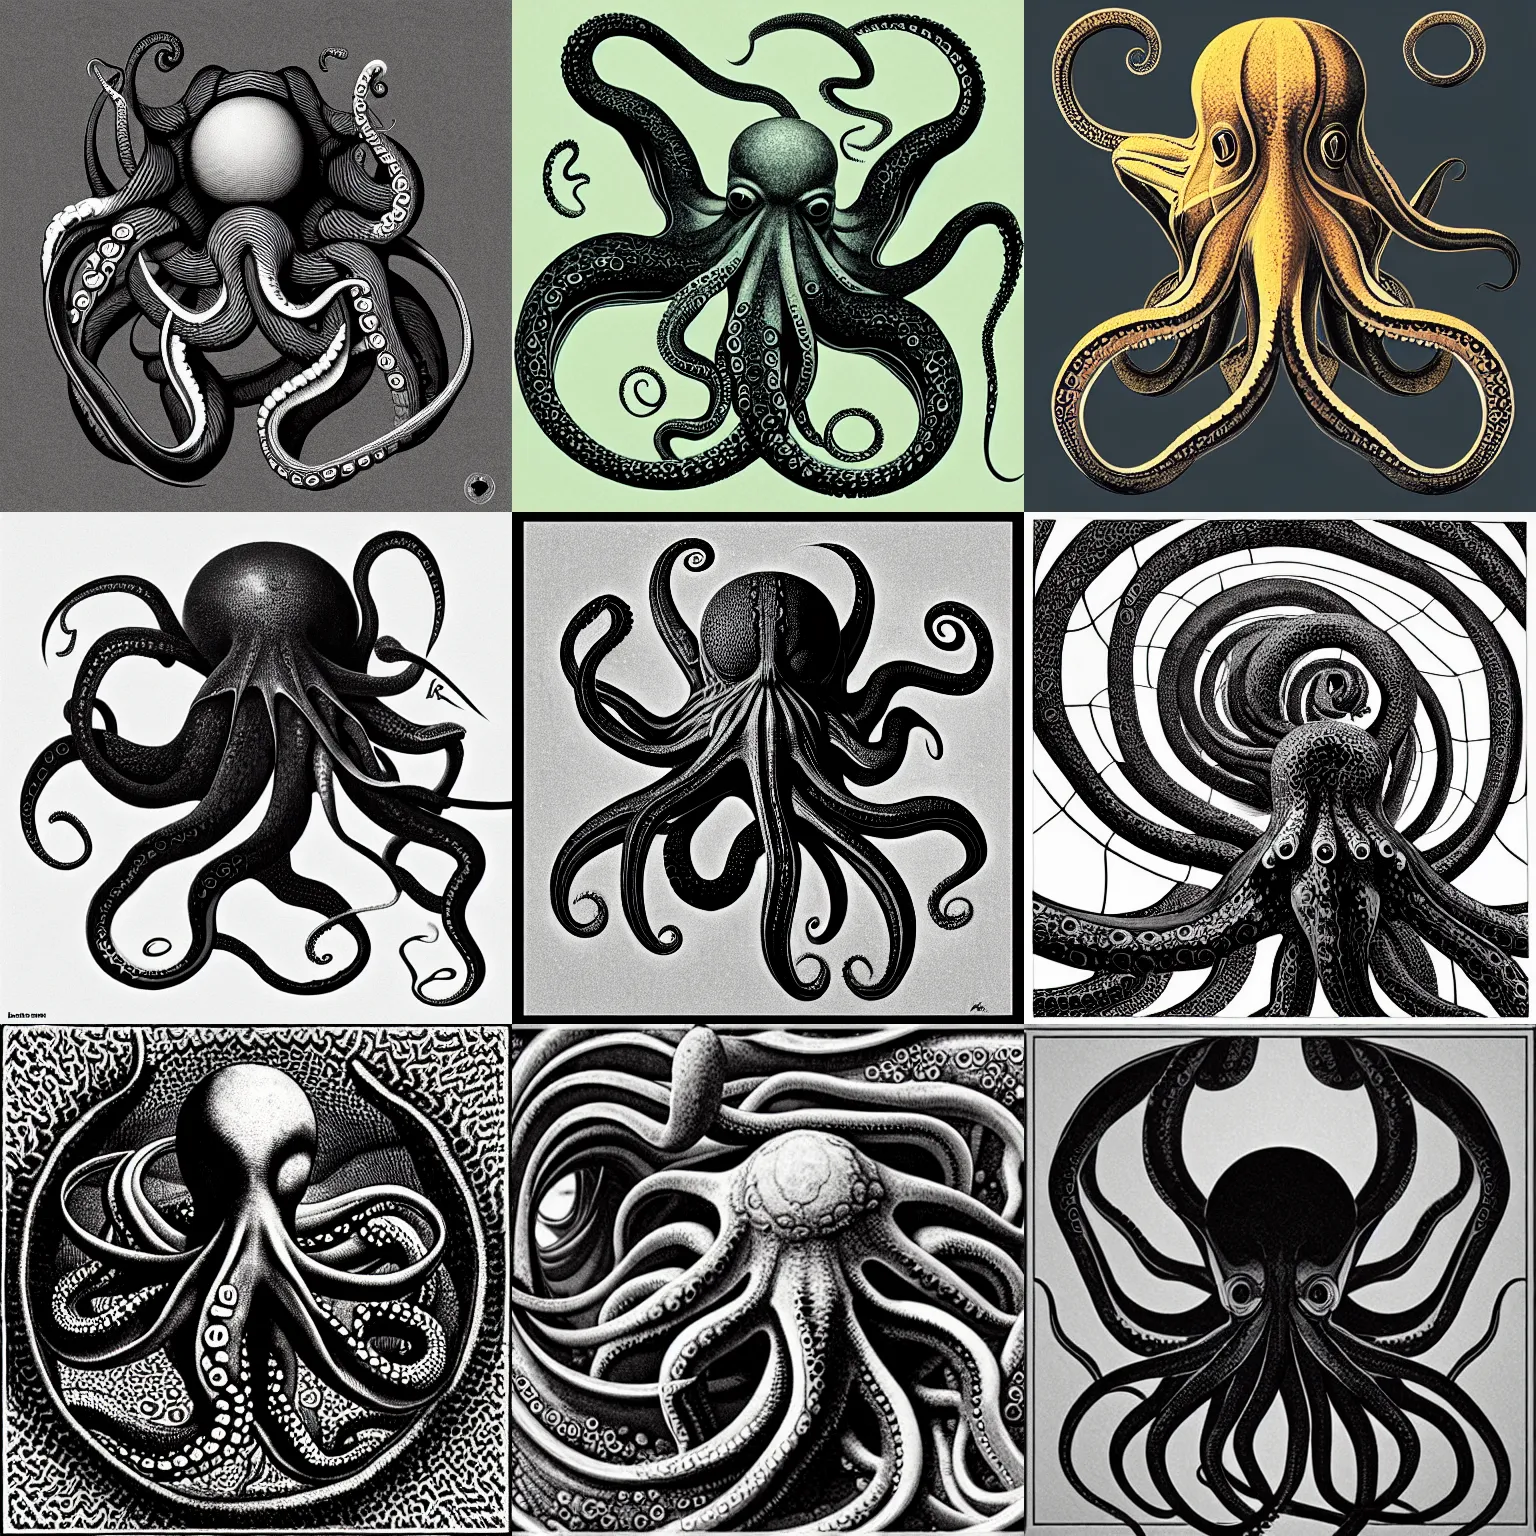 Prompt: logo profile photo of an octopus by mc escher, beksinski tessellation, artstation